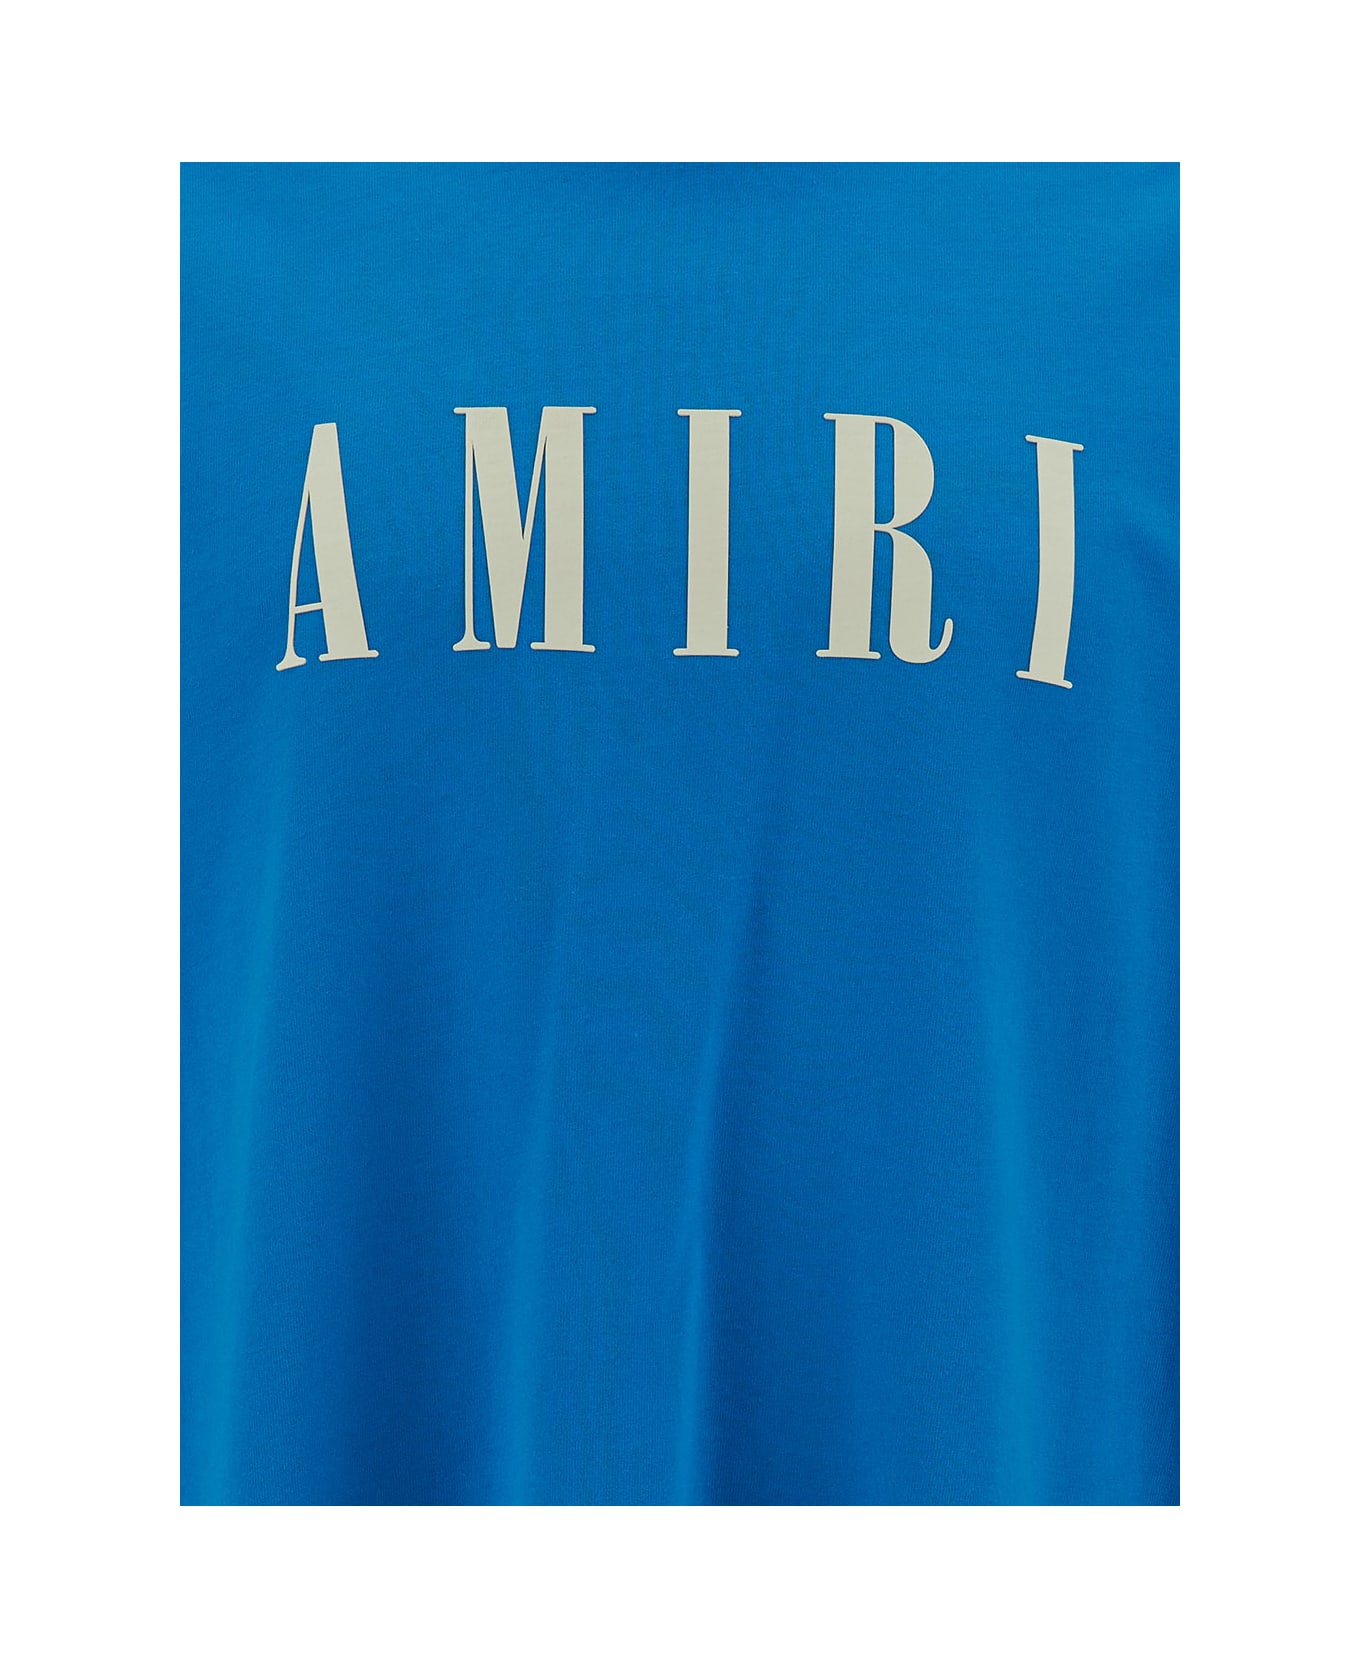 AMIRI Core Logo Tee - BLUE